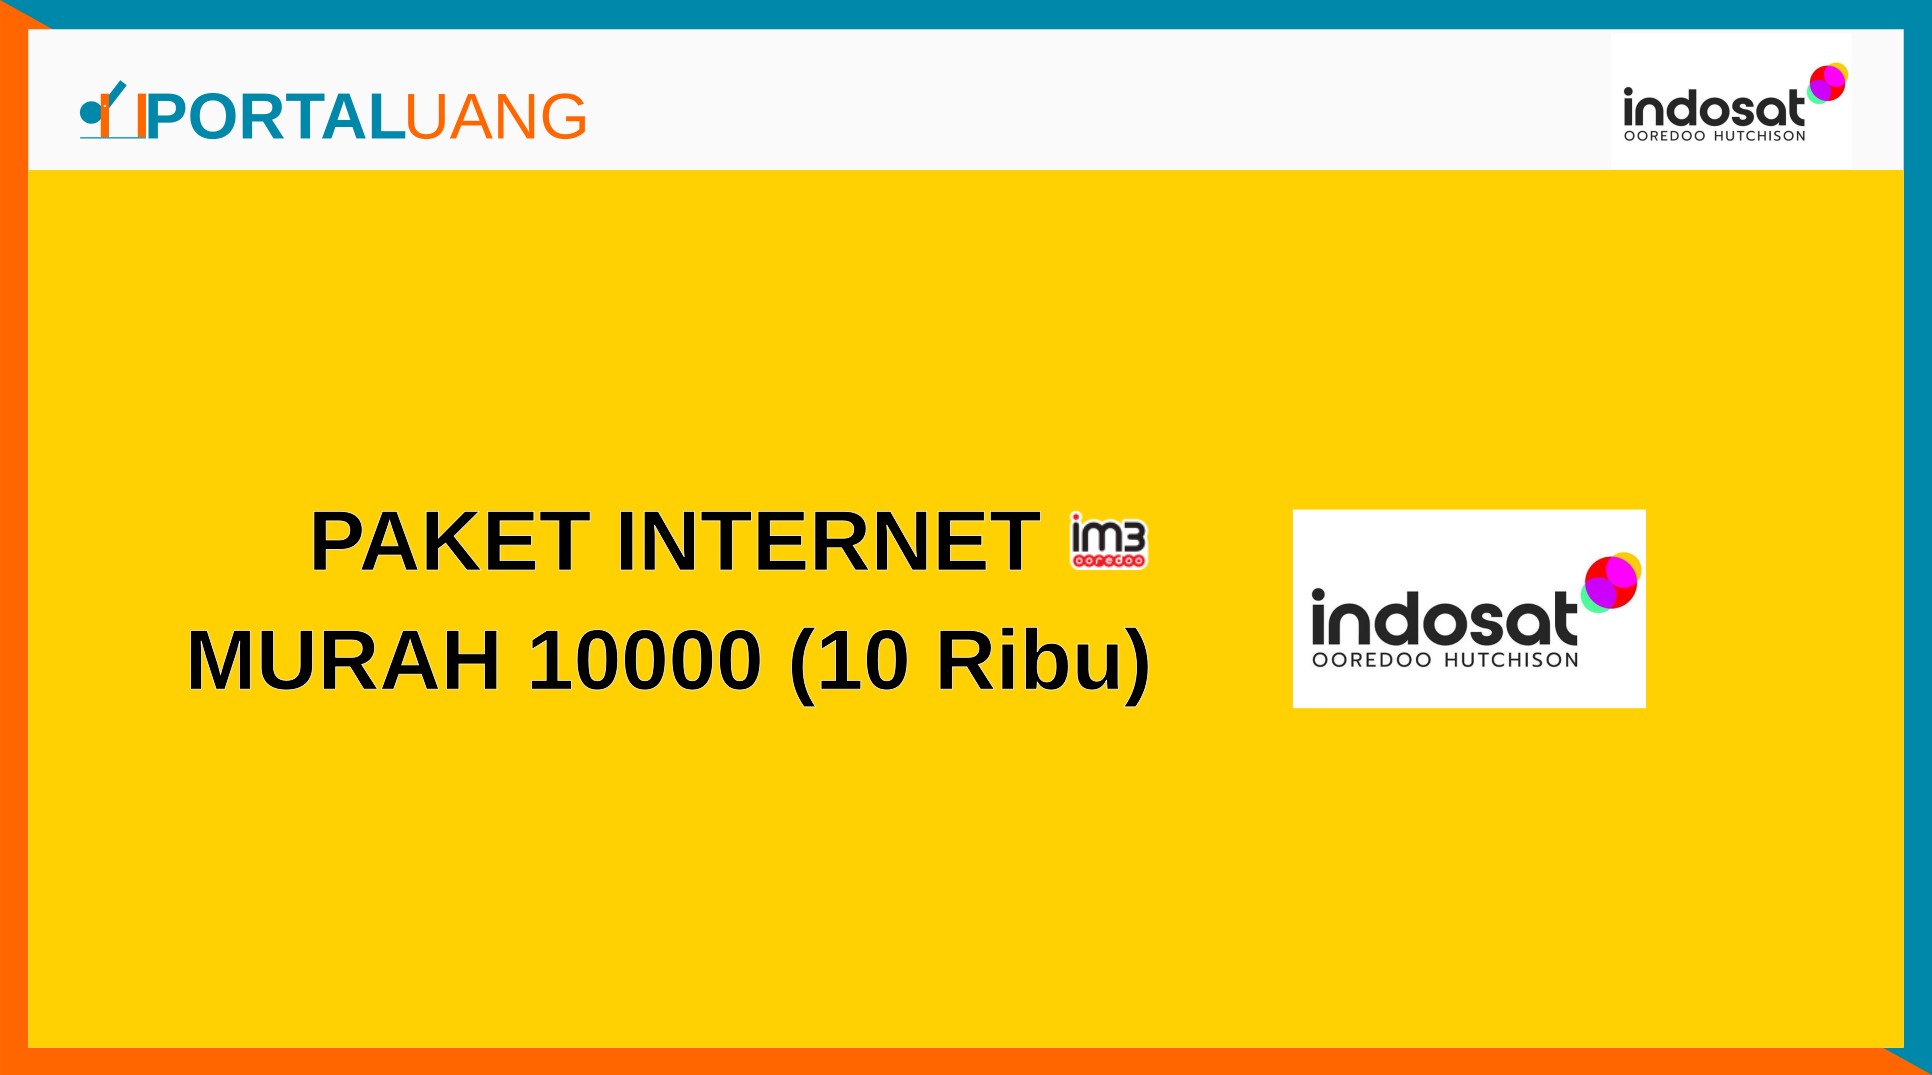 6 Paket Internet Indosat (IM3) Murah 10000 (10 Ribu) Terbaru 2022